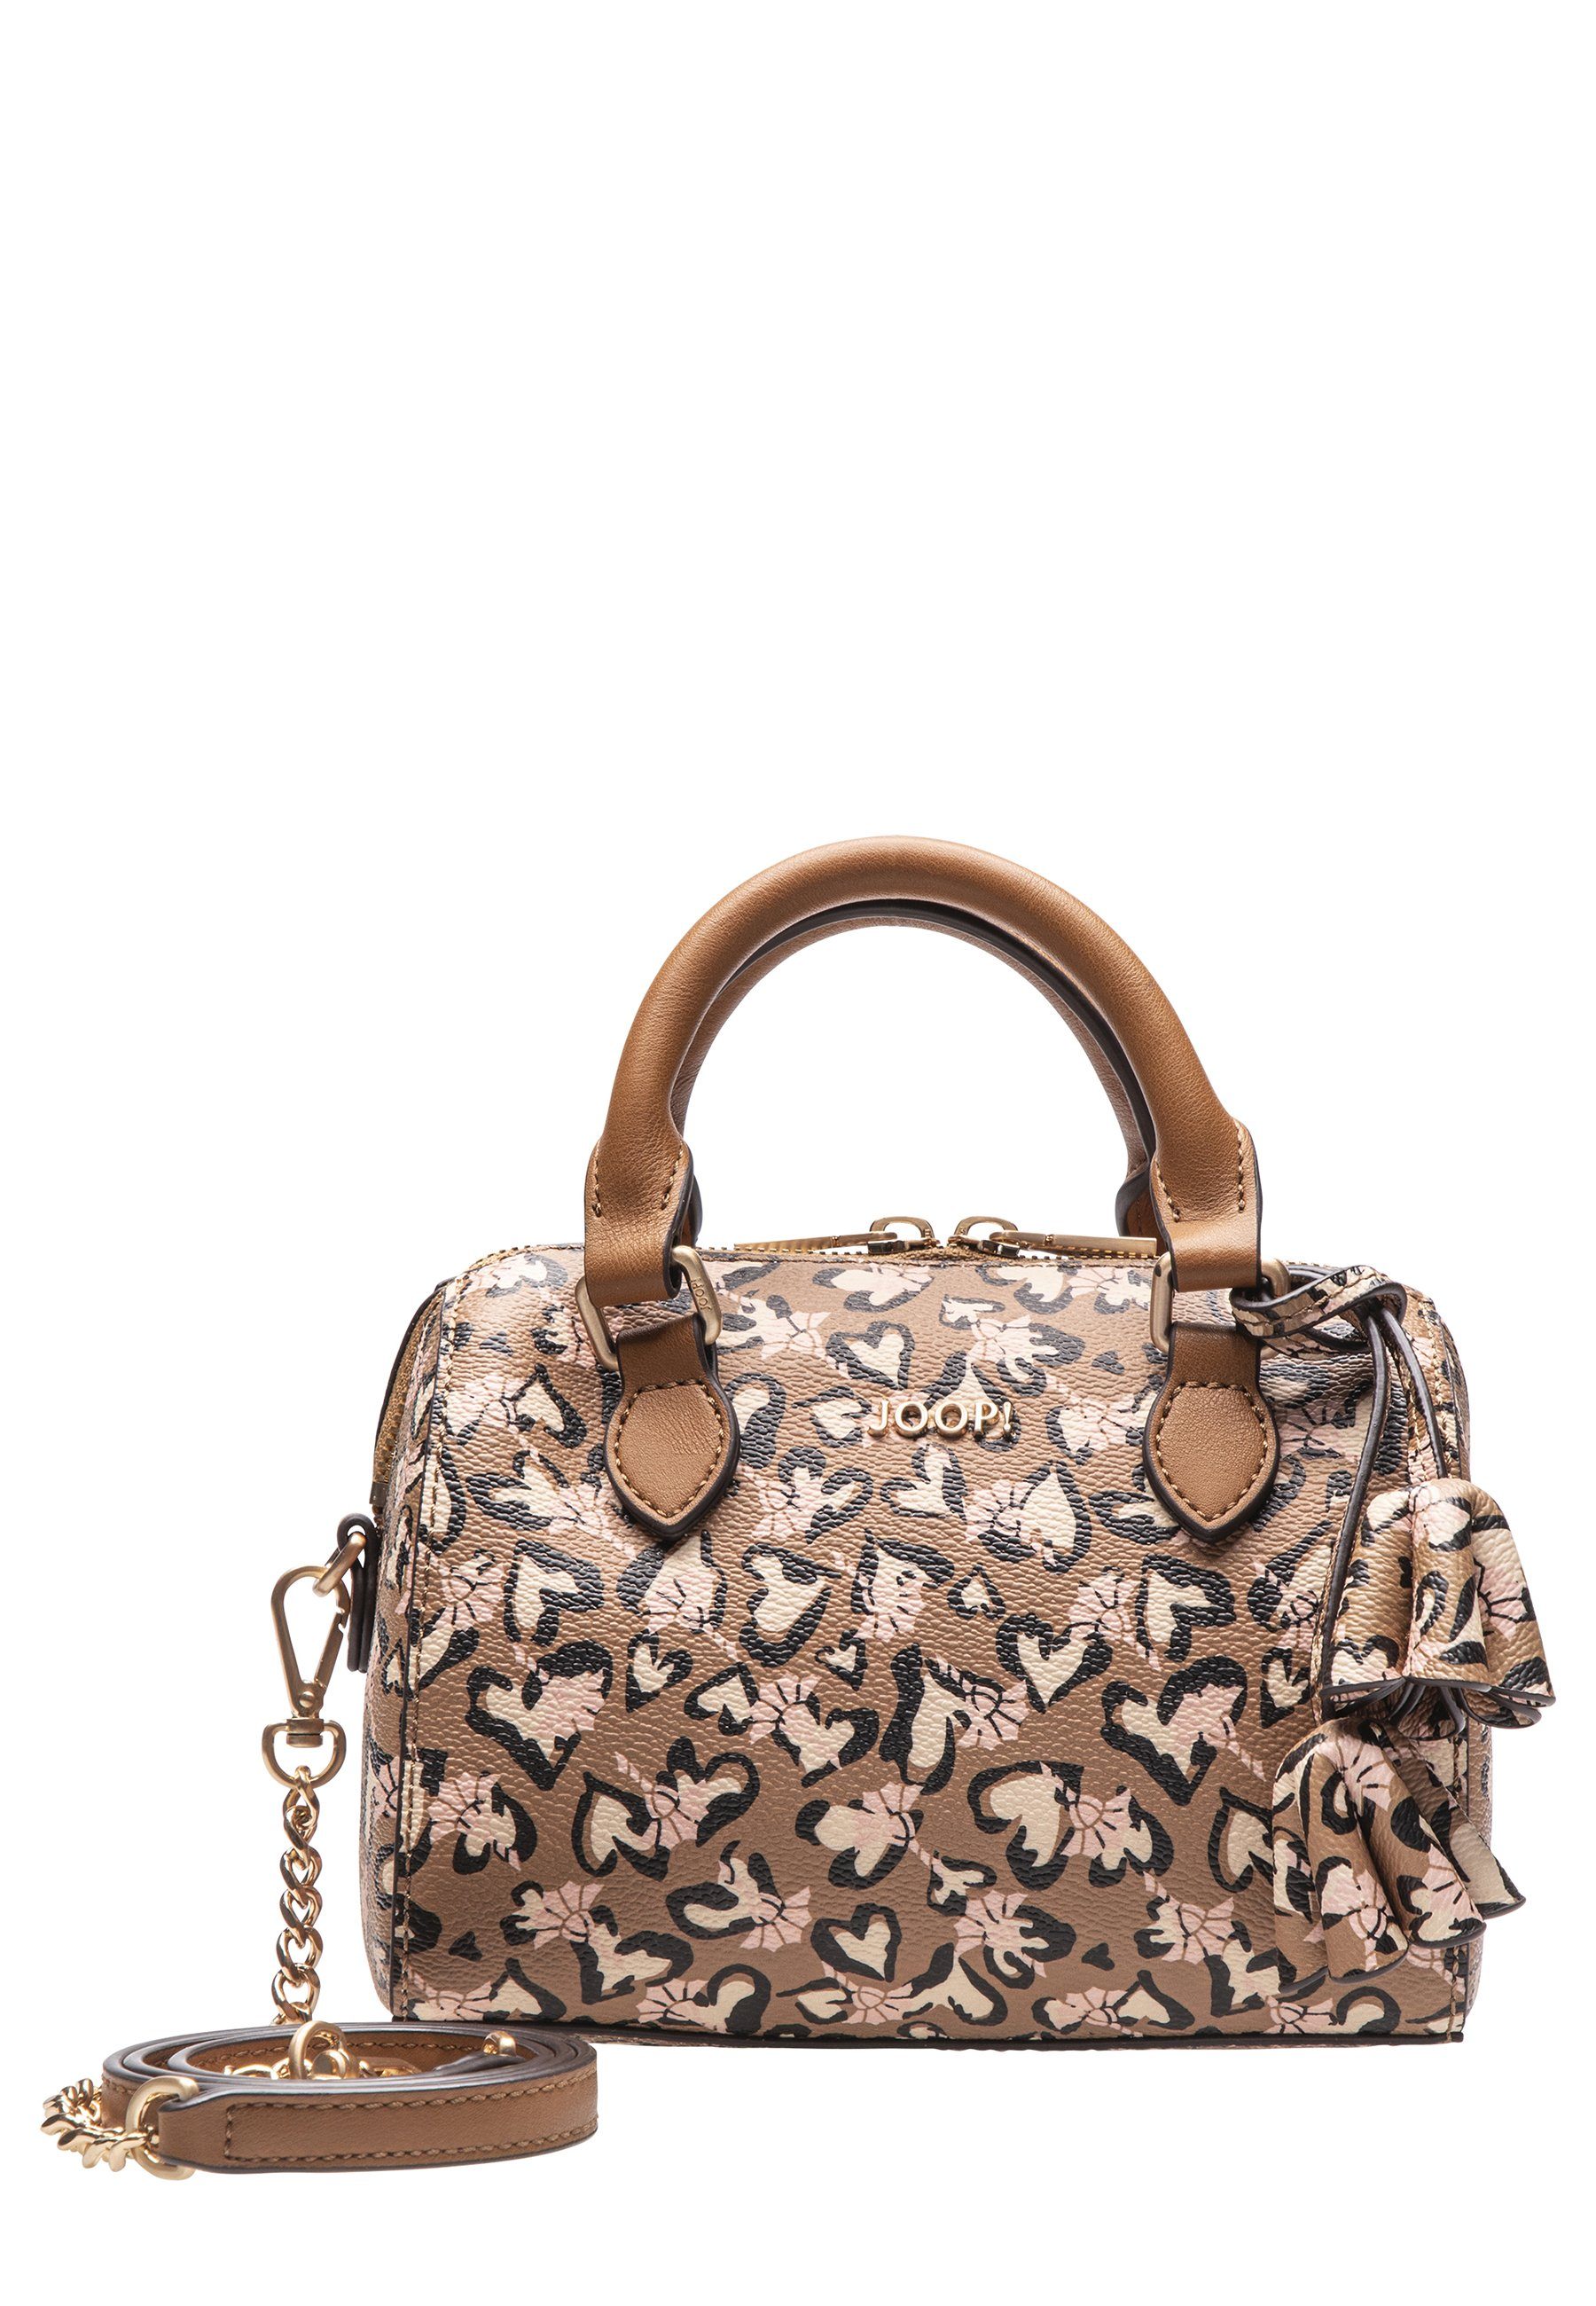 Joop! Handtasche »Cortina Amore« online kaufen | OTTO